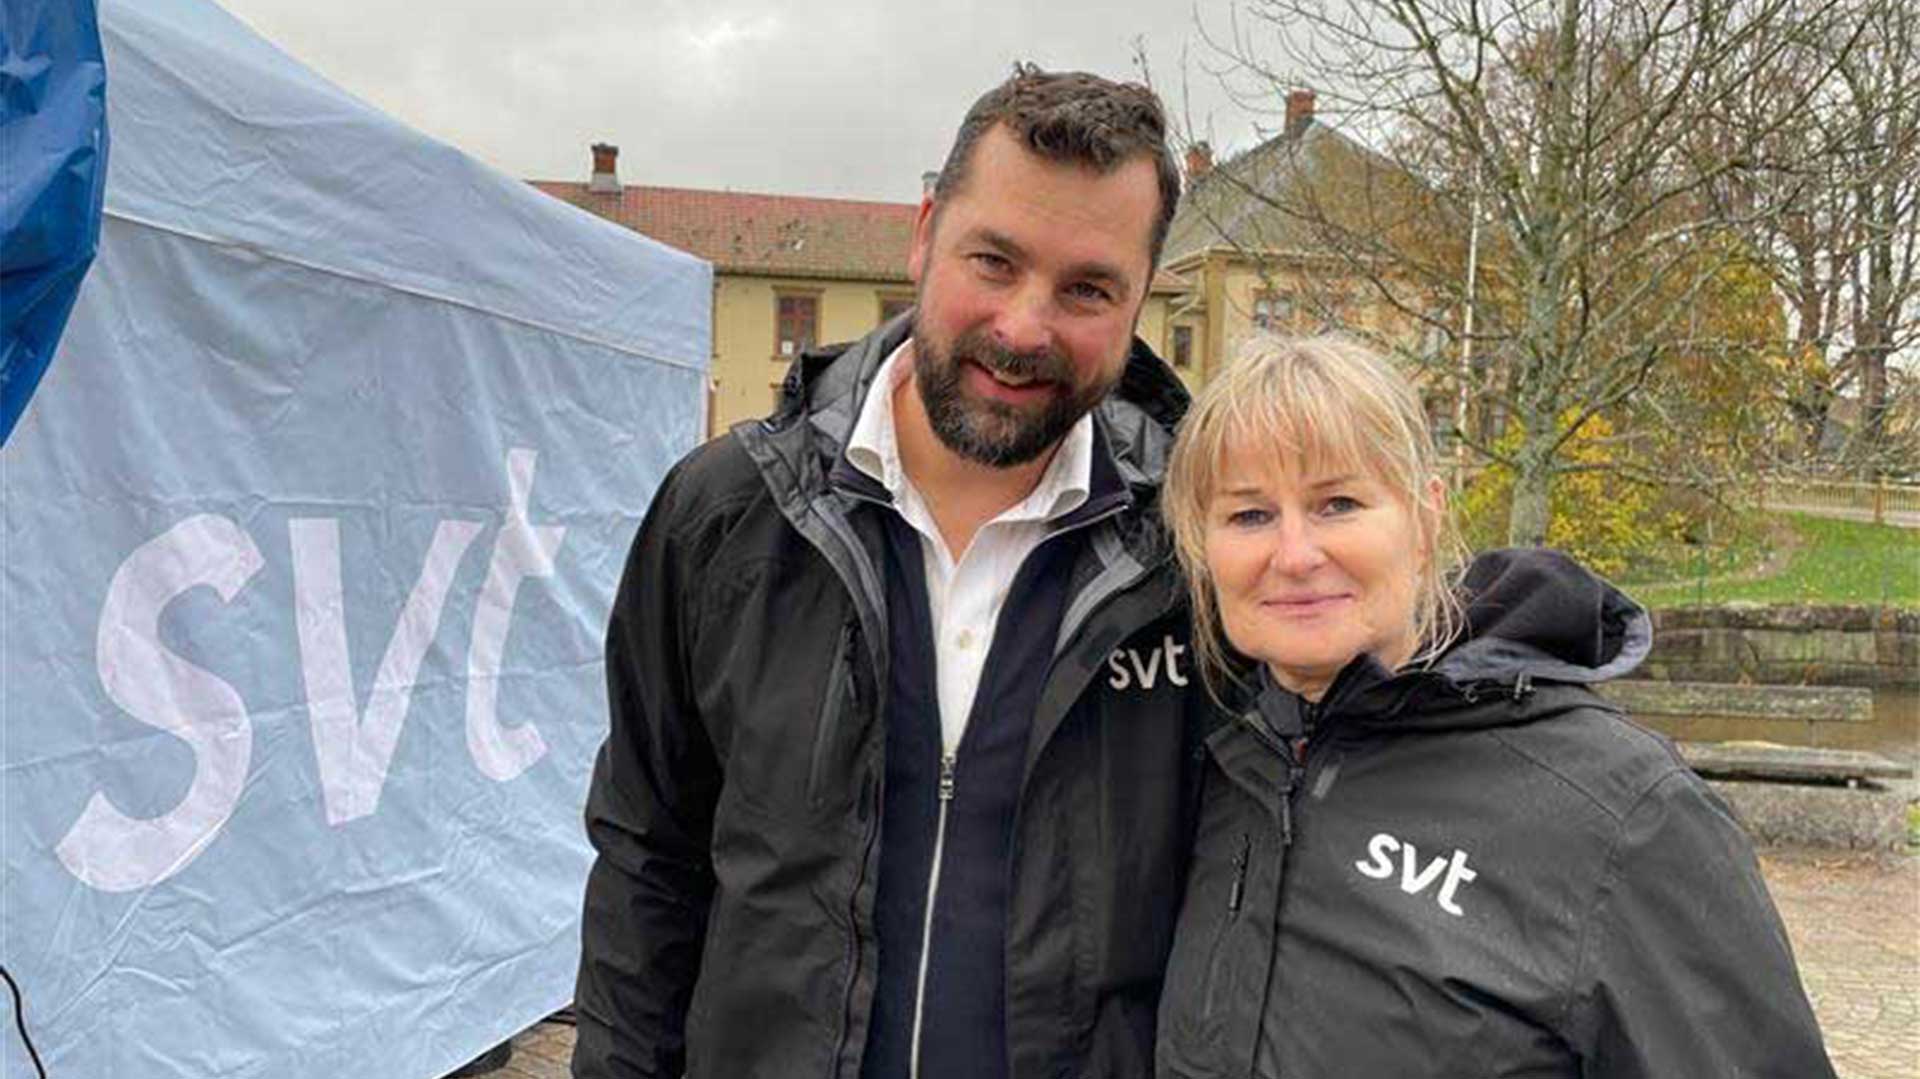 Anton Svendsen redaktionschef SVT Nyheter Väst och Susanne Junkala, redaktionschef SVT Nyheter Värmland.